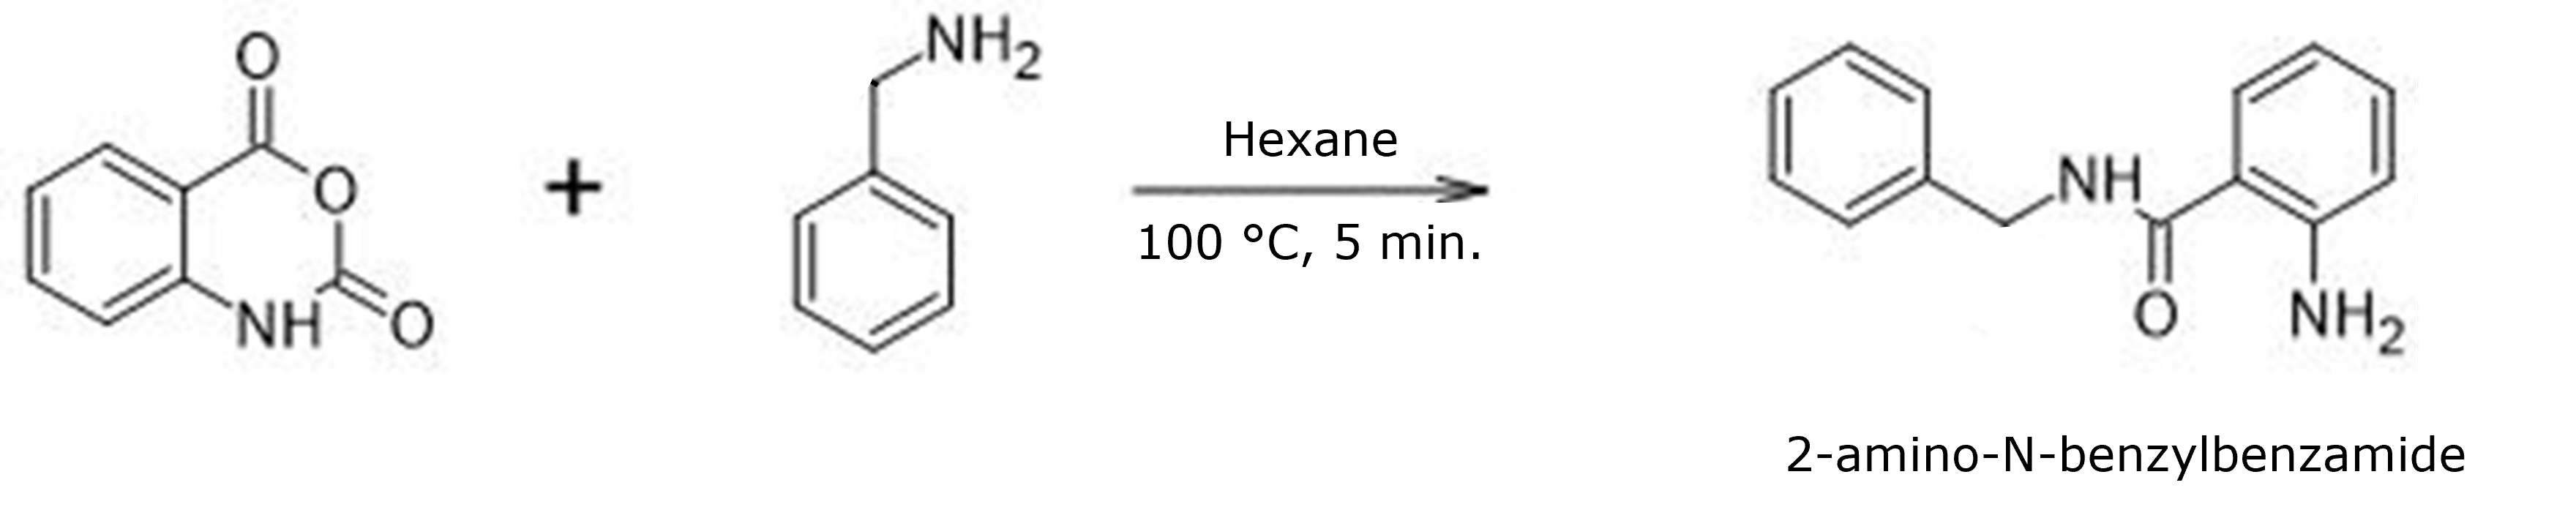 Figure 1.IA+BA reaction 100°C, 5 min in hexane.